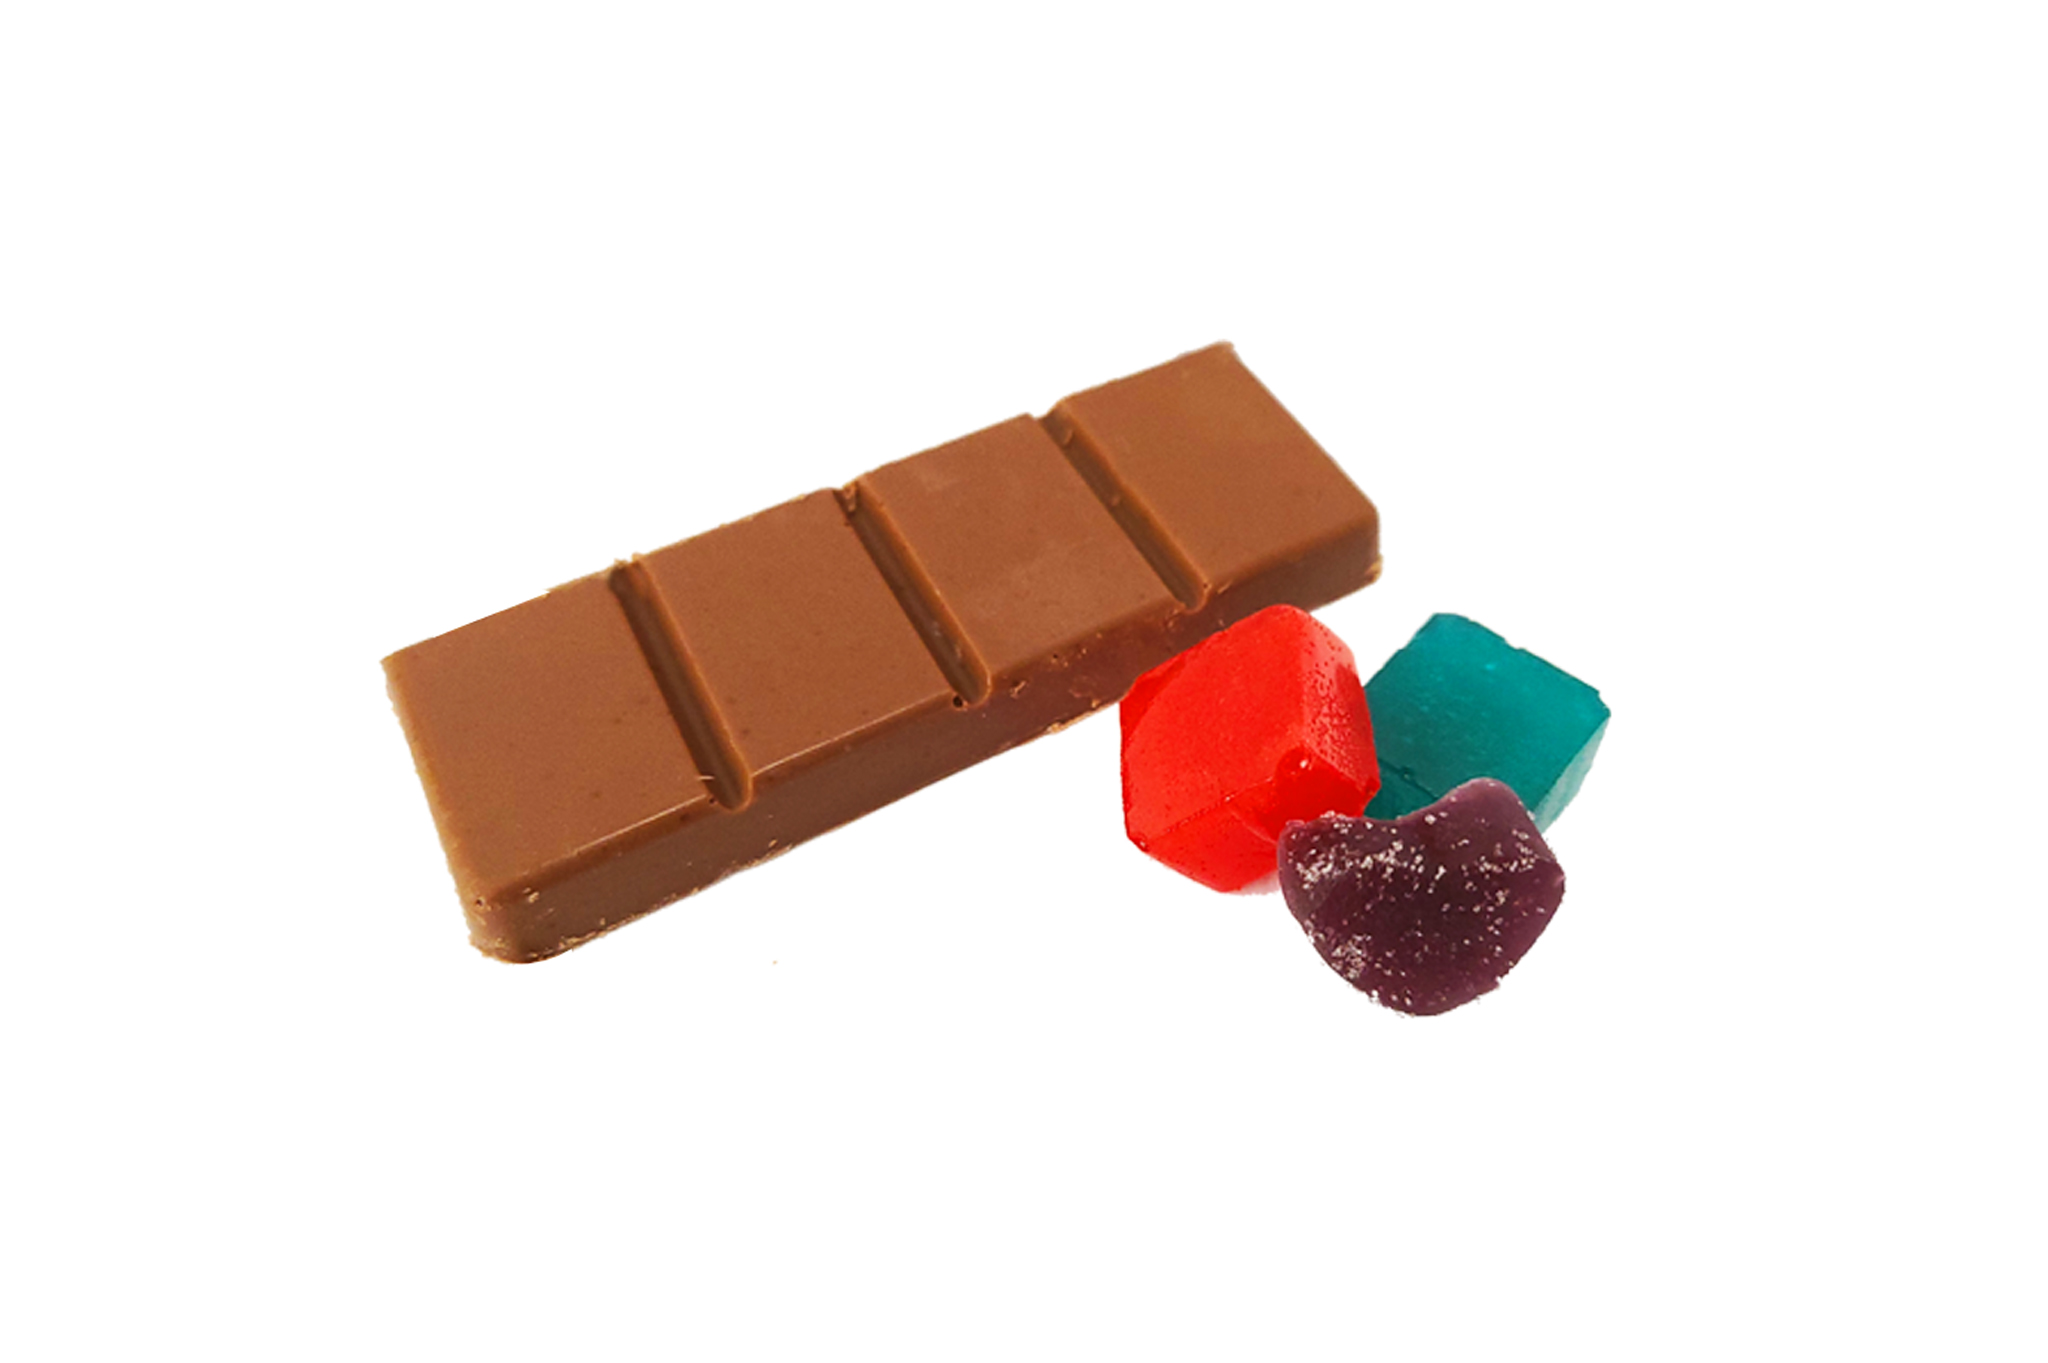 http://redfeatherlaboratories.com/wp-content/uploads/2020/11/Chocolate-and-gummies-resized.jpg